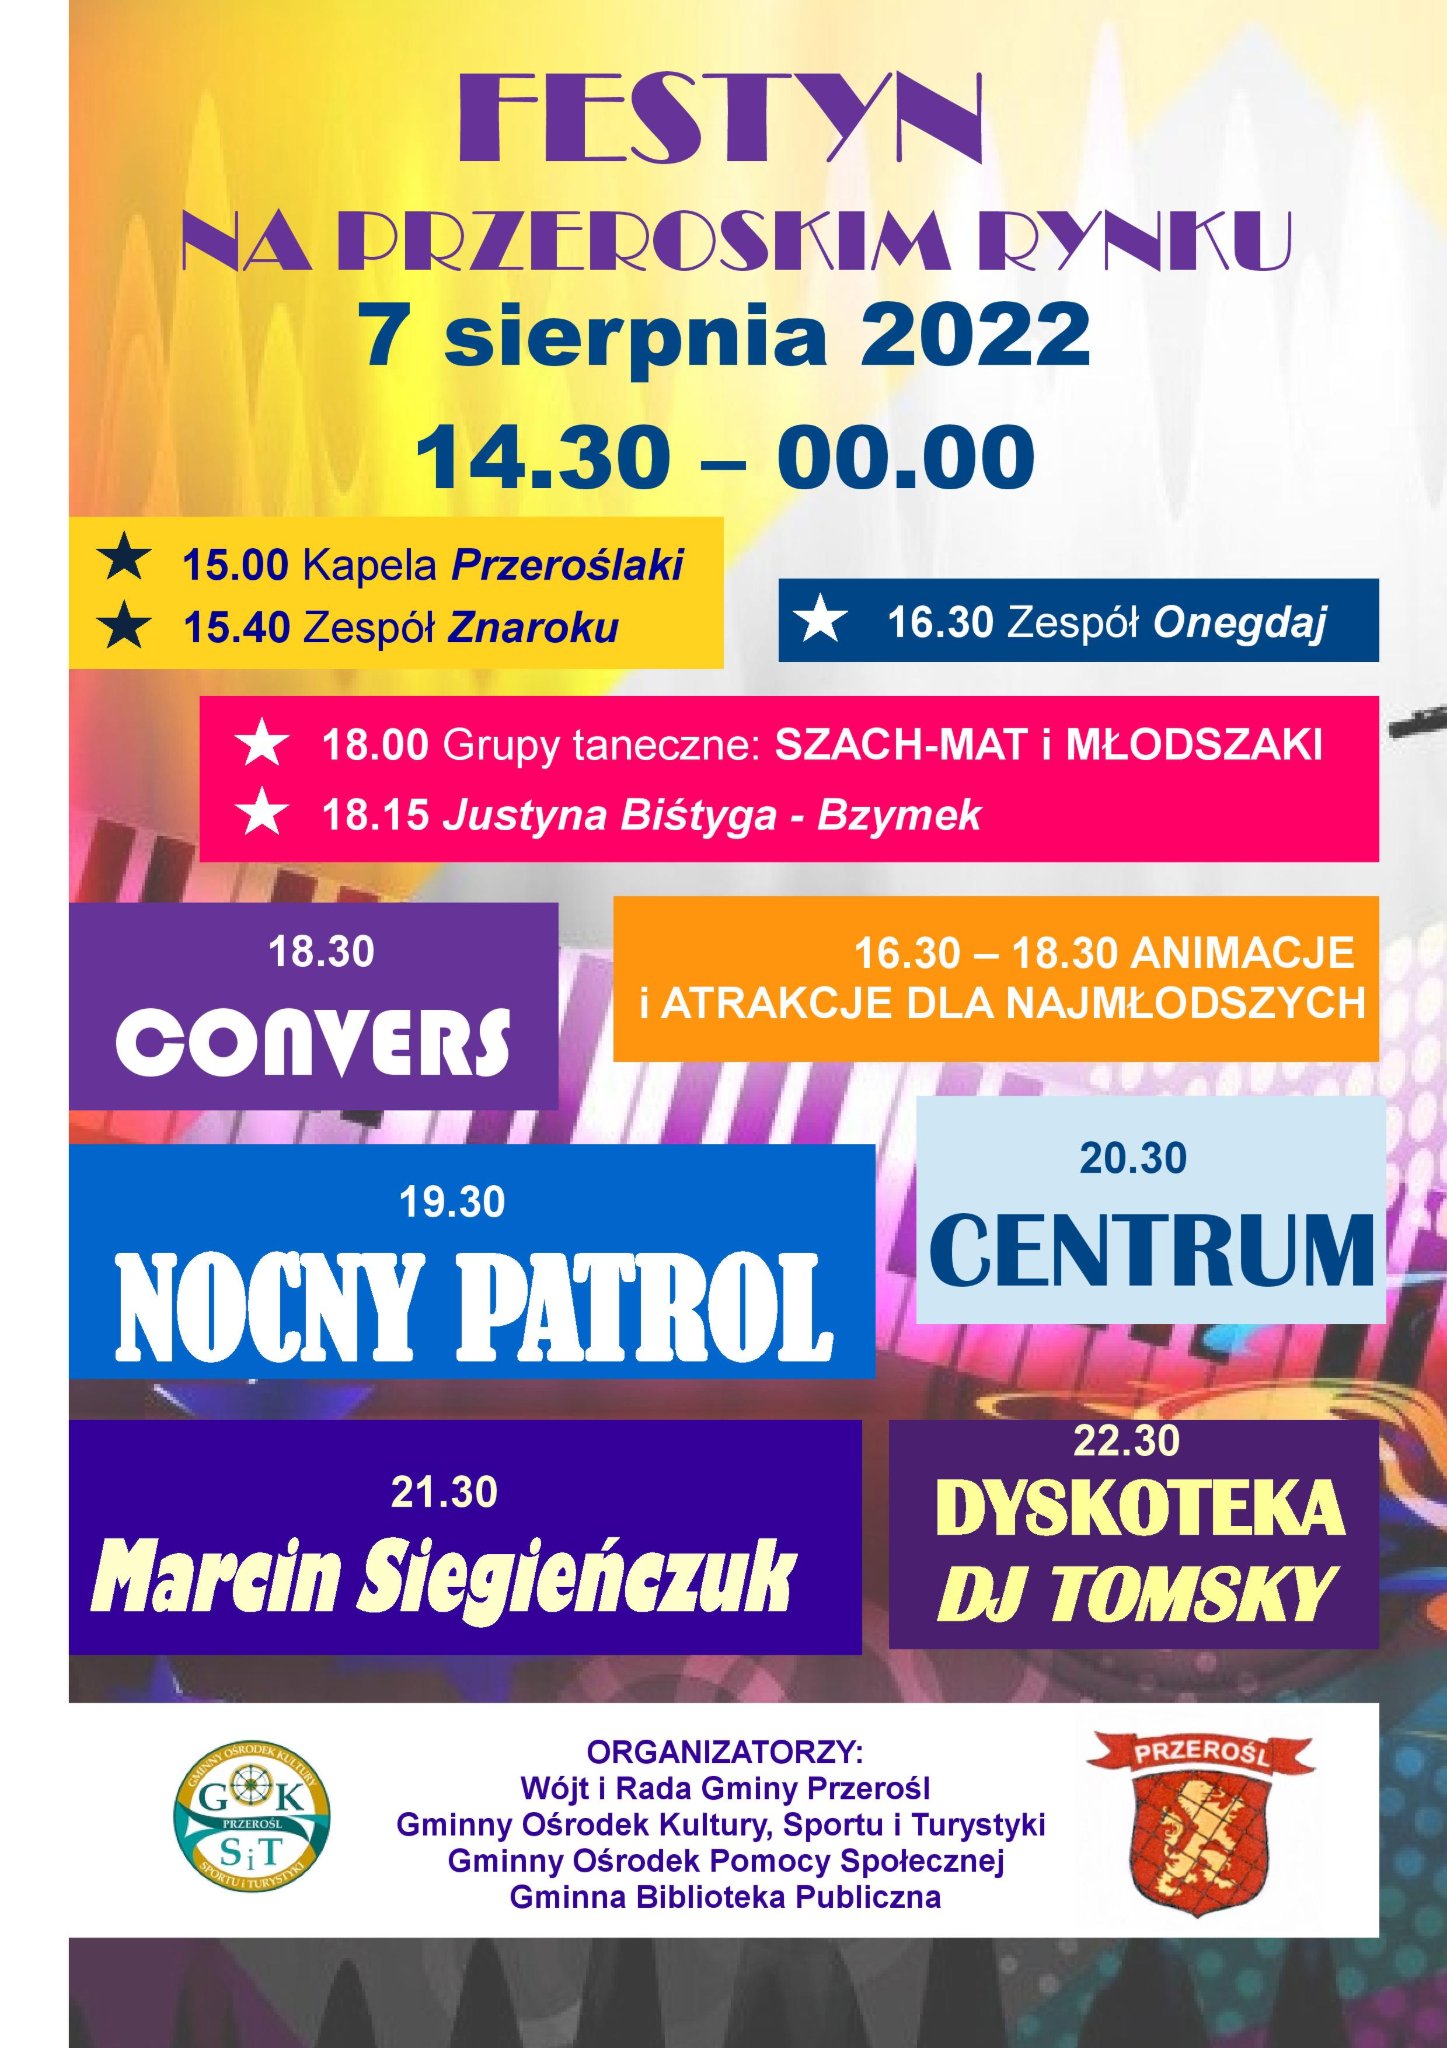 festyn-2022-z-facebooka-goksit-gminny-o-rodek-kultury-sportu-i